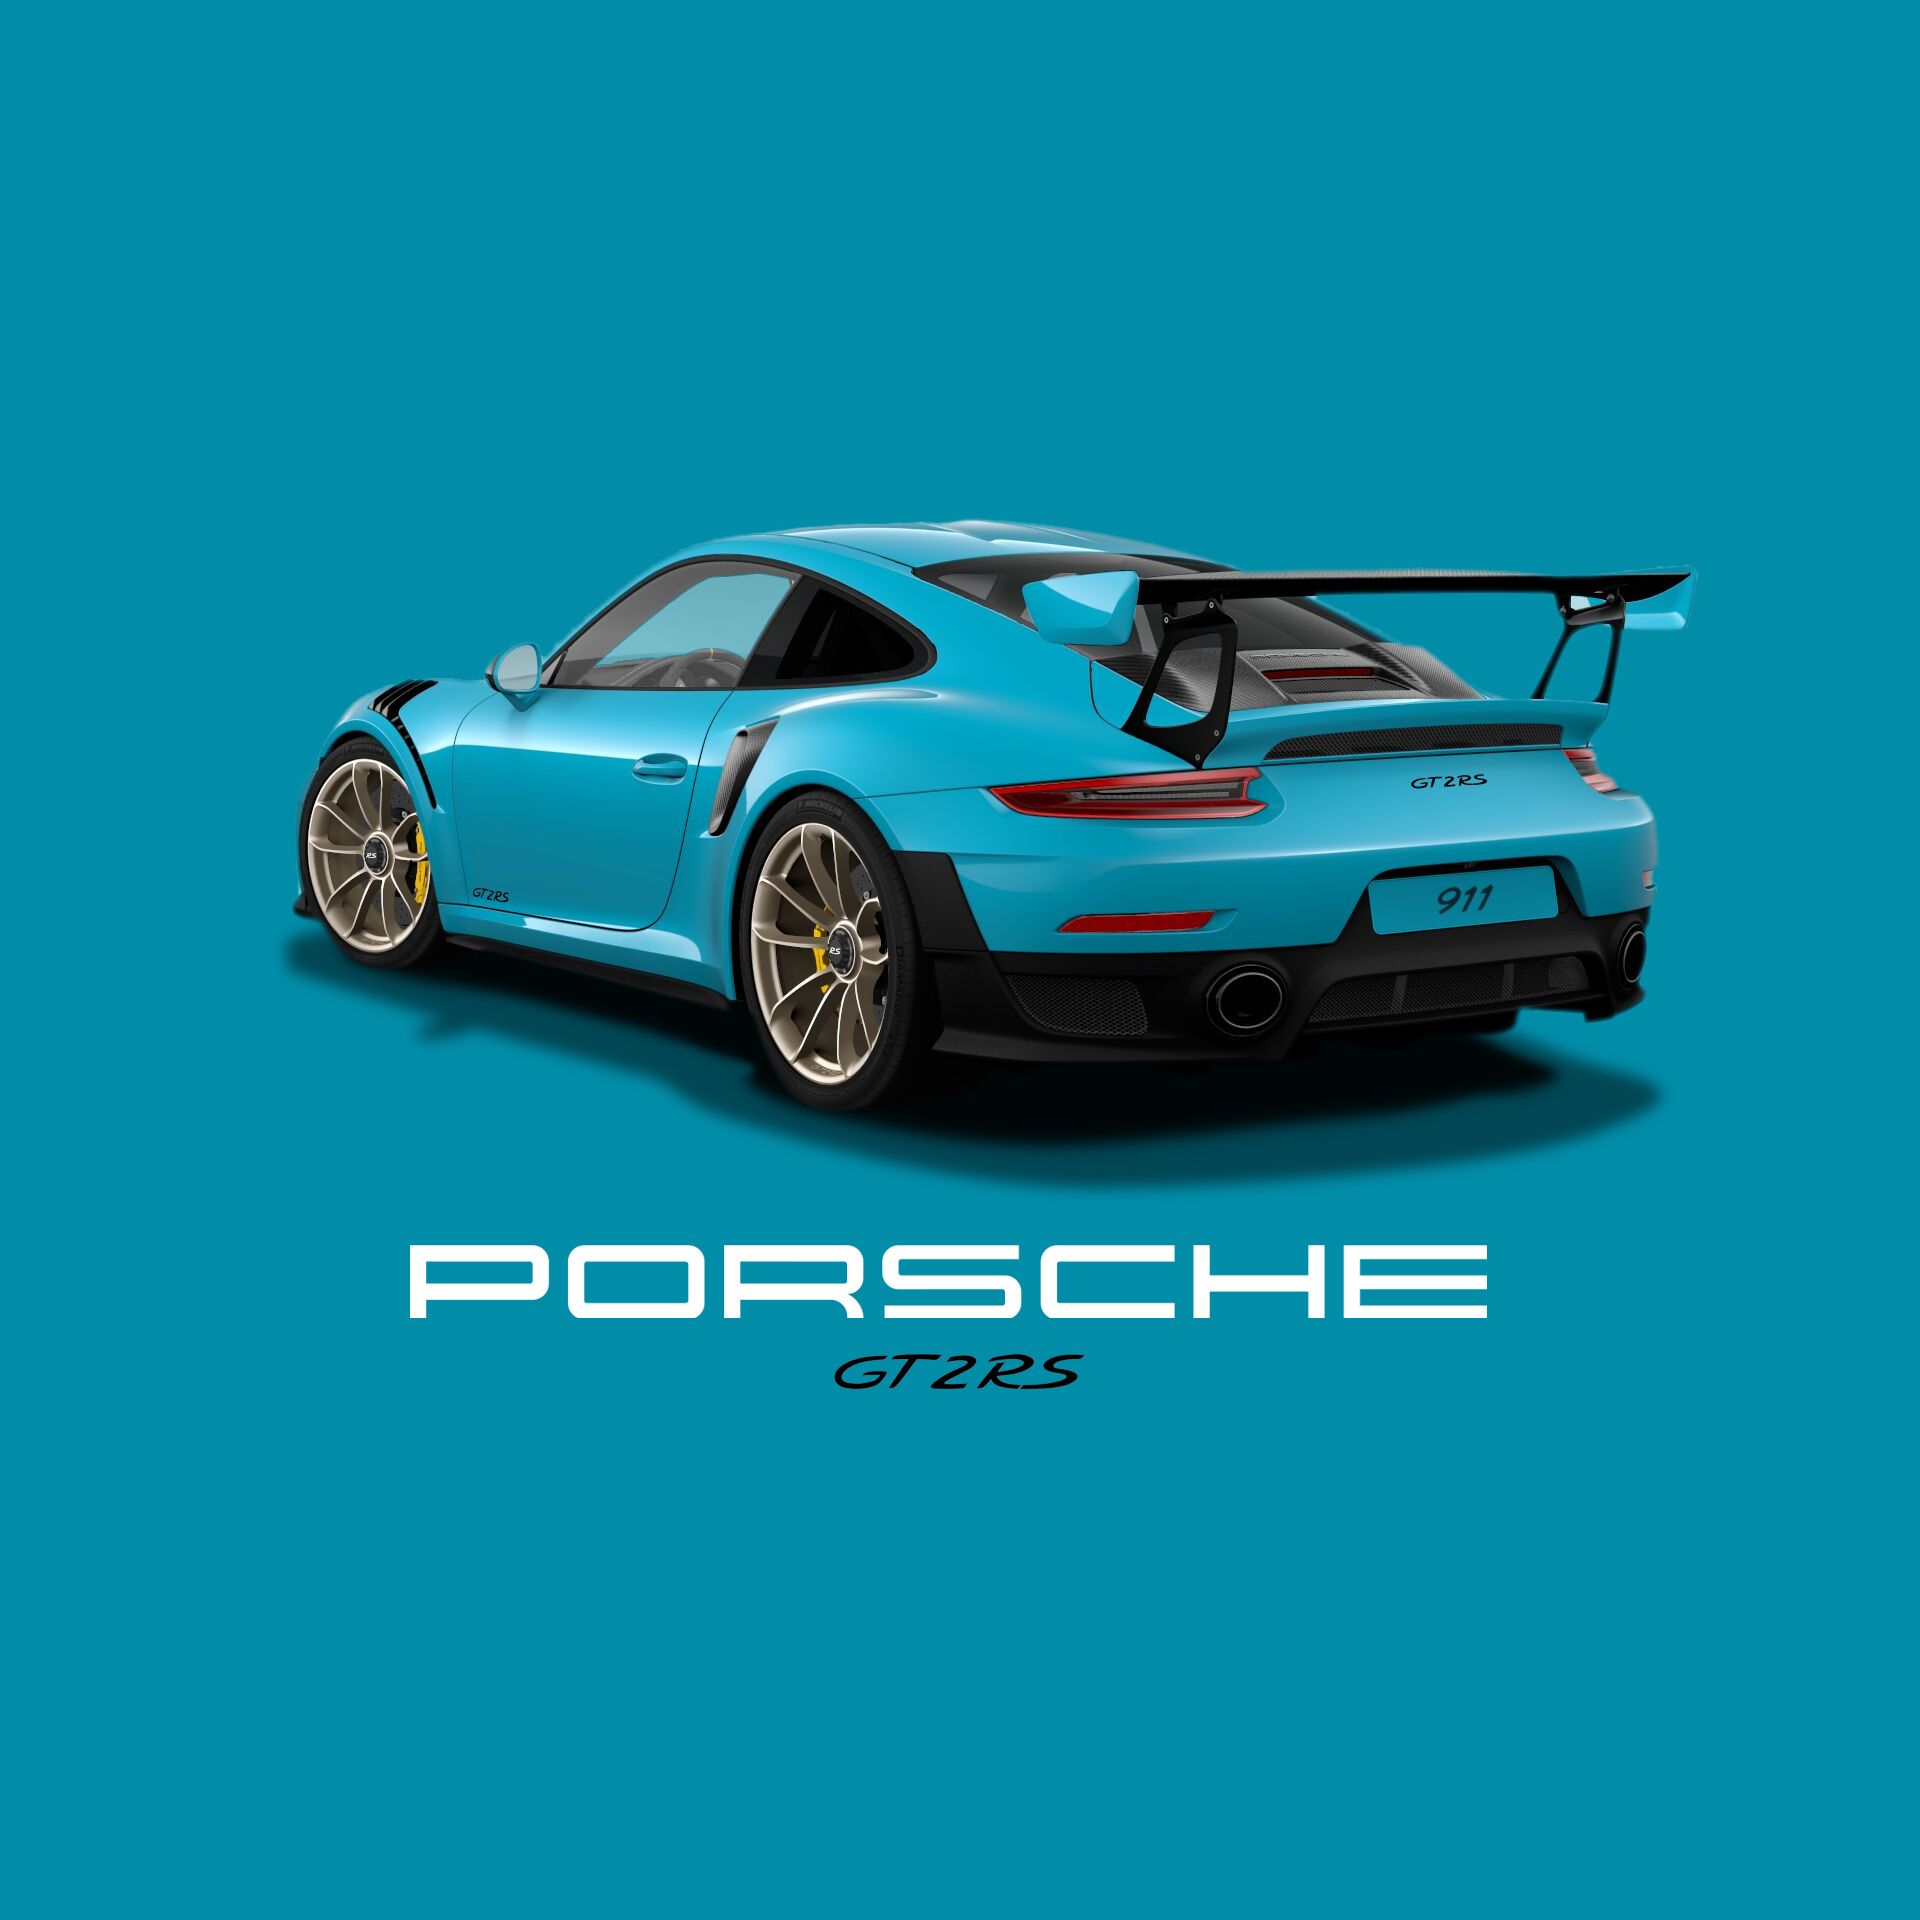 Porsche GT2 RS, Miami Blue, White Gold GT2 Forged Alloys. Porsche gt, Porsche cars, Mercedes benz cars